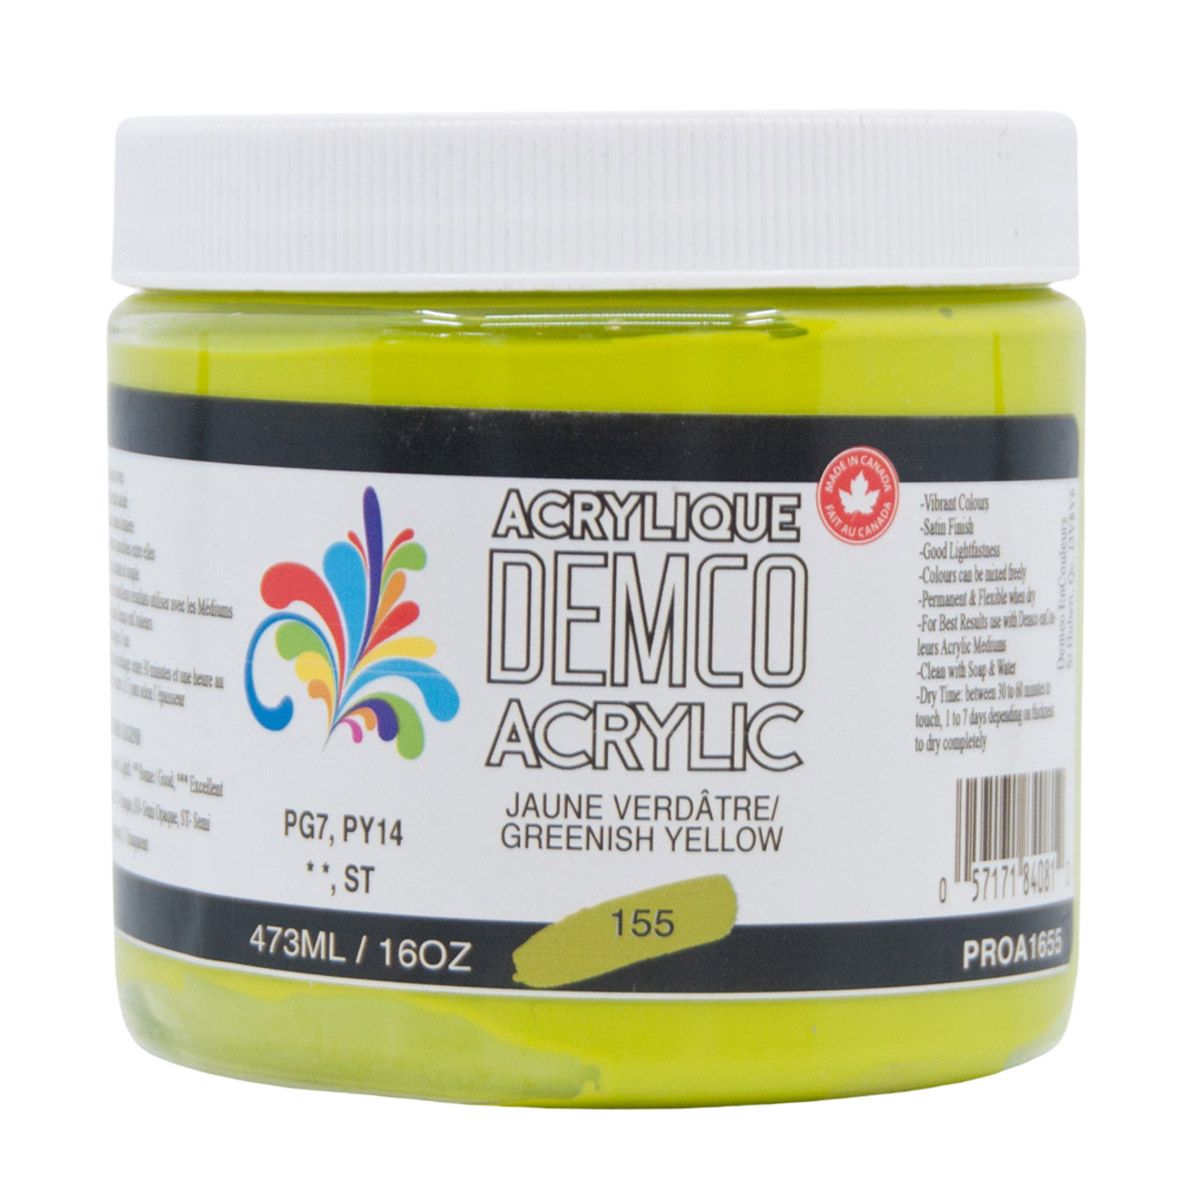 Demco Acrylic Greenish Yellow 473ml/16oz